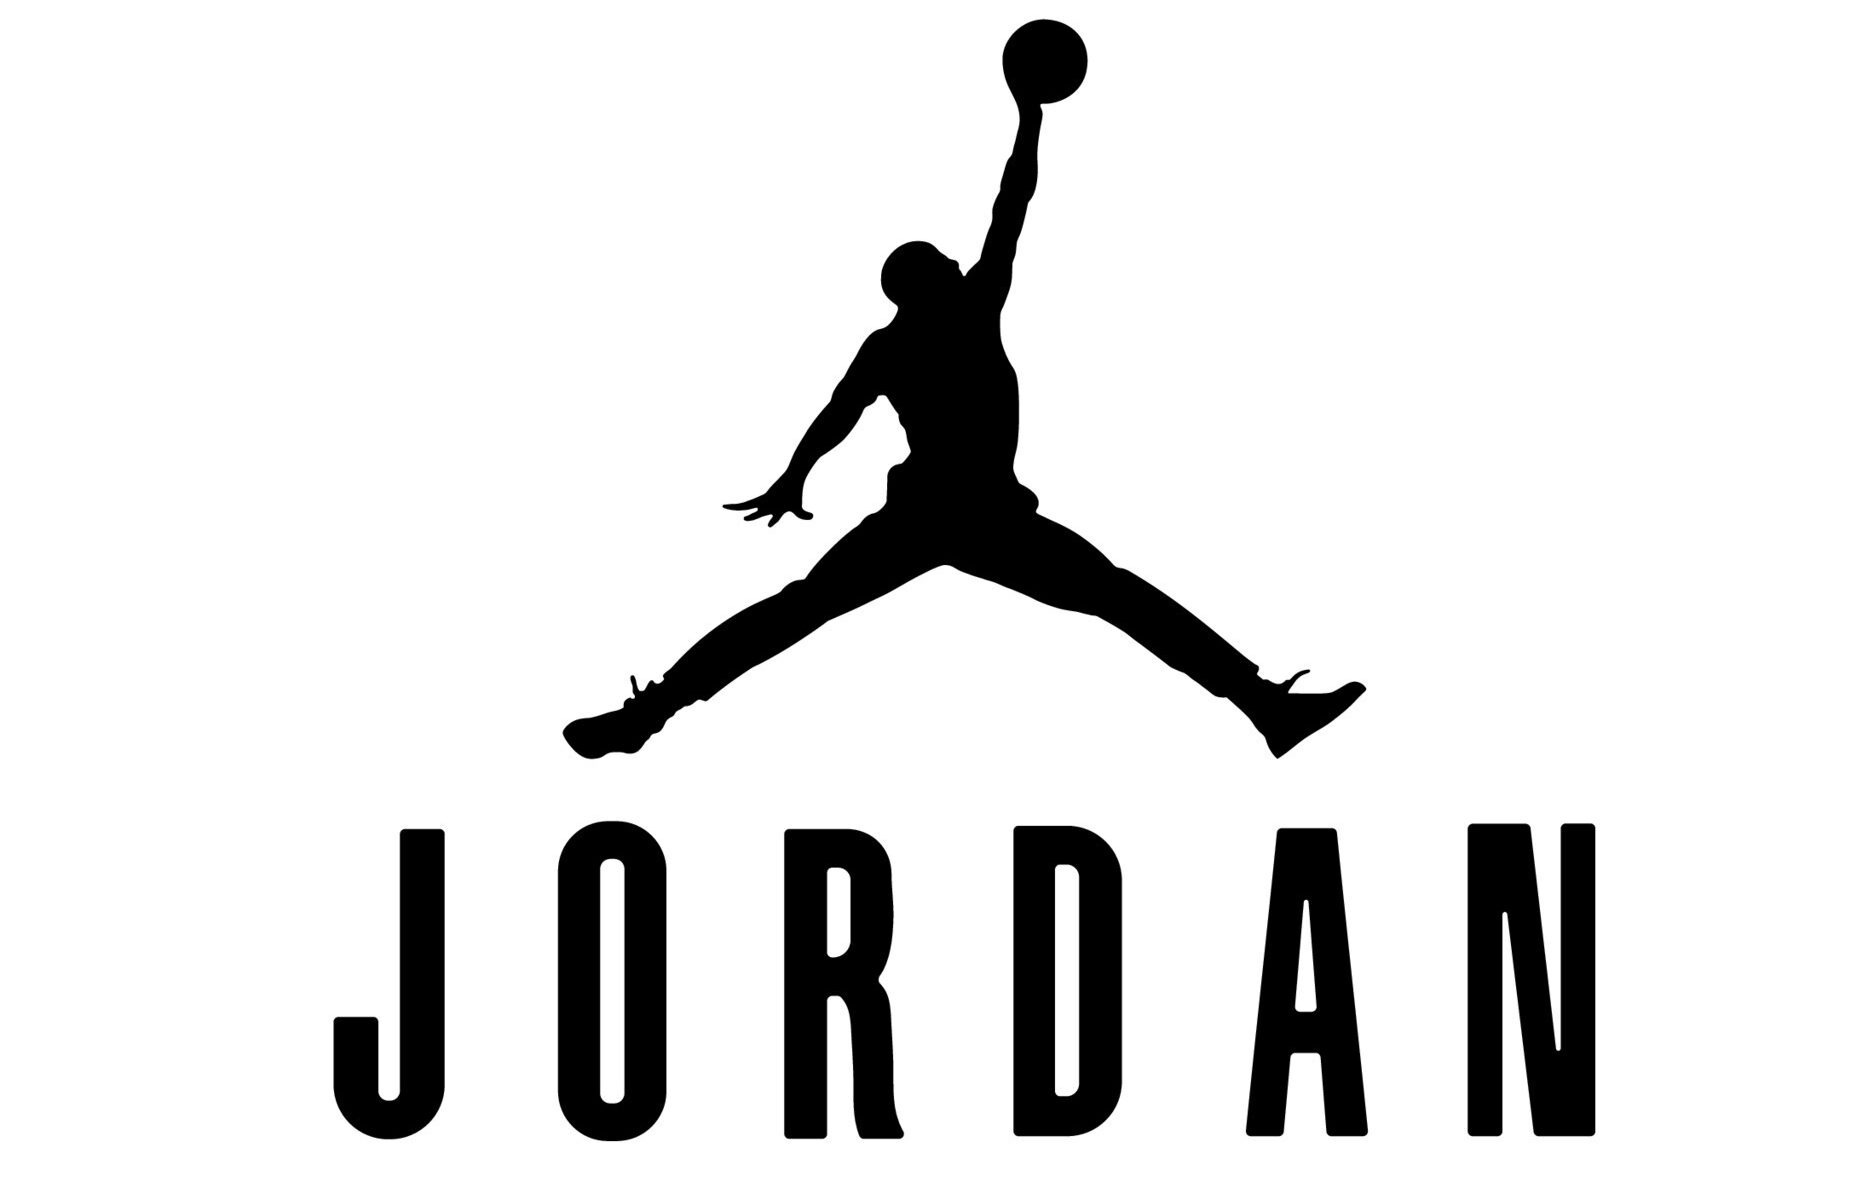 jordan-brand-logo-symbol-with-name-black-design-clothes-sportwear-illustration-free-vector